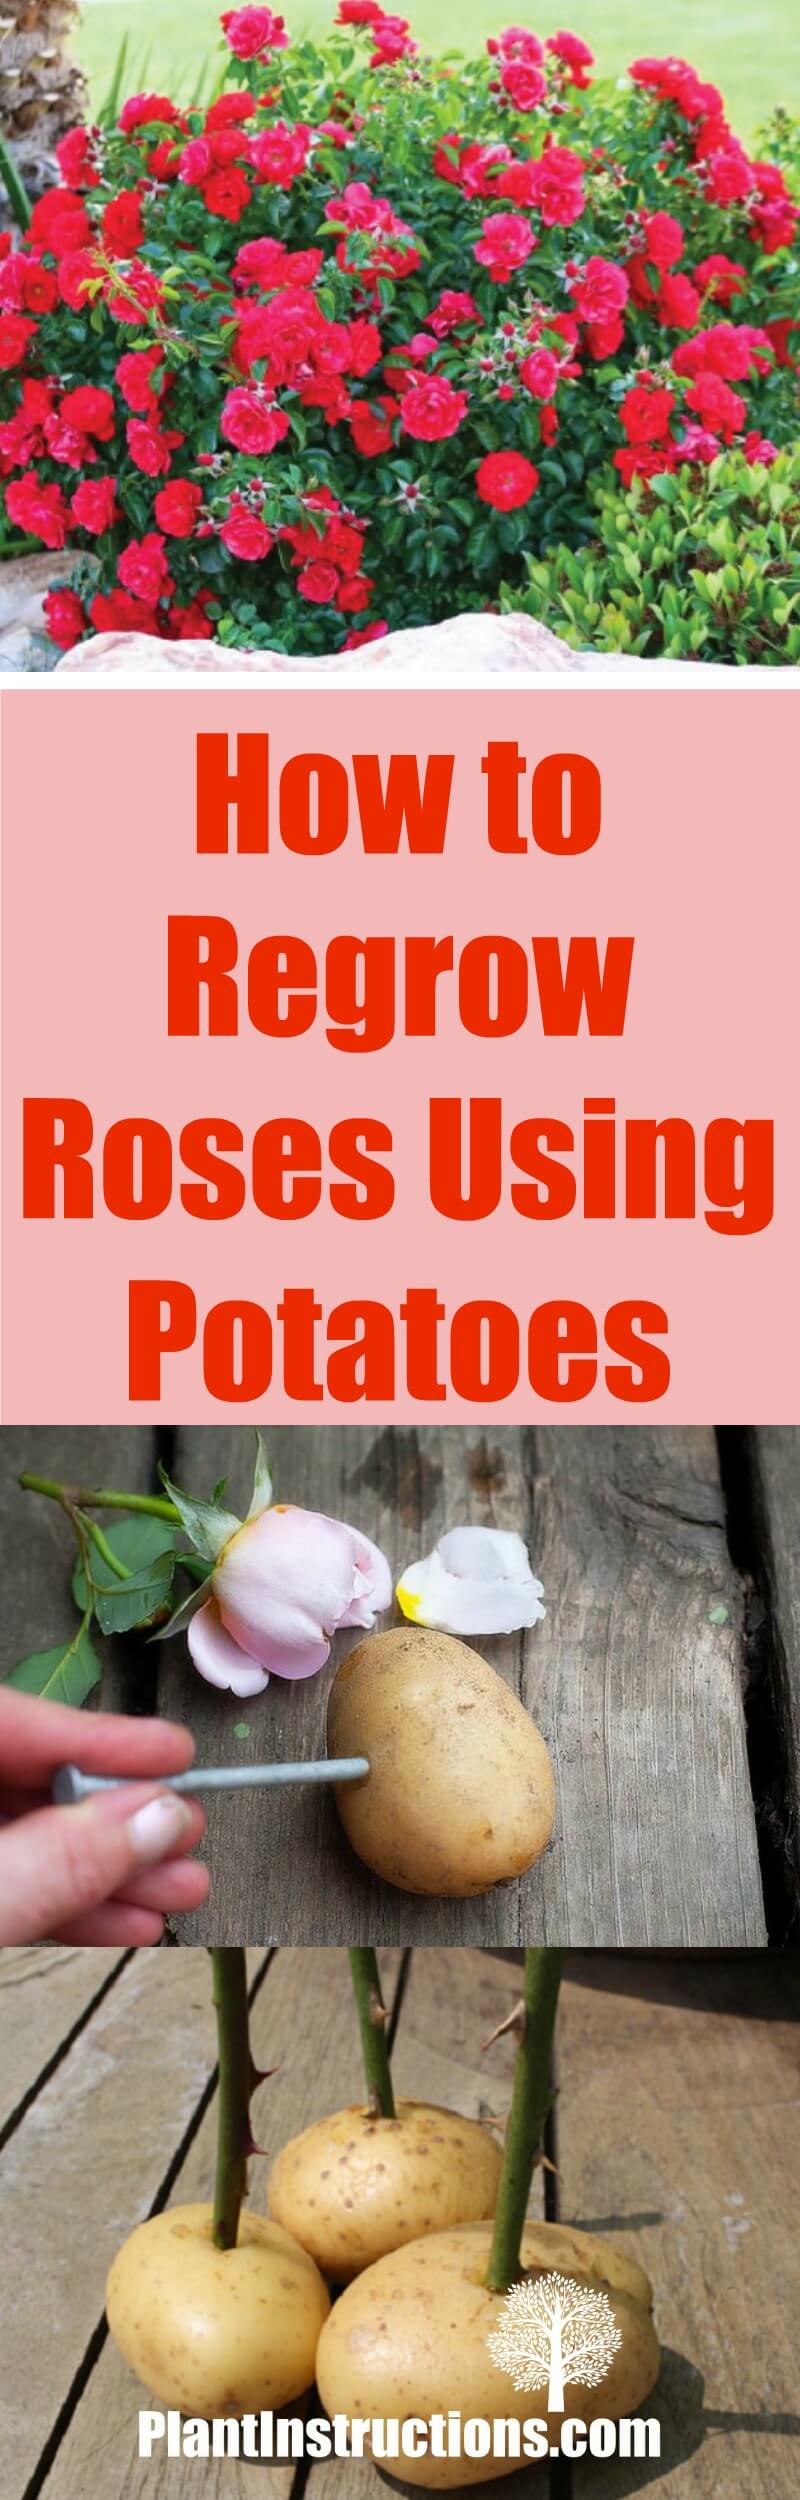 regrow roses